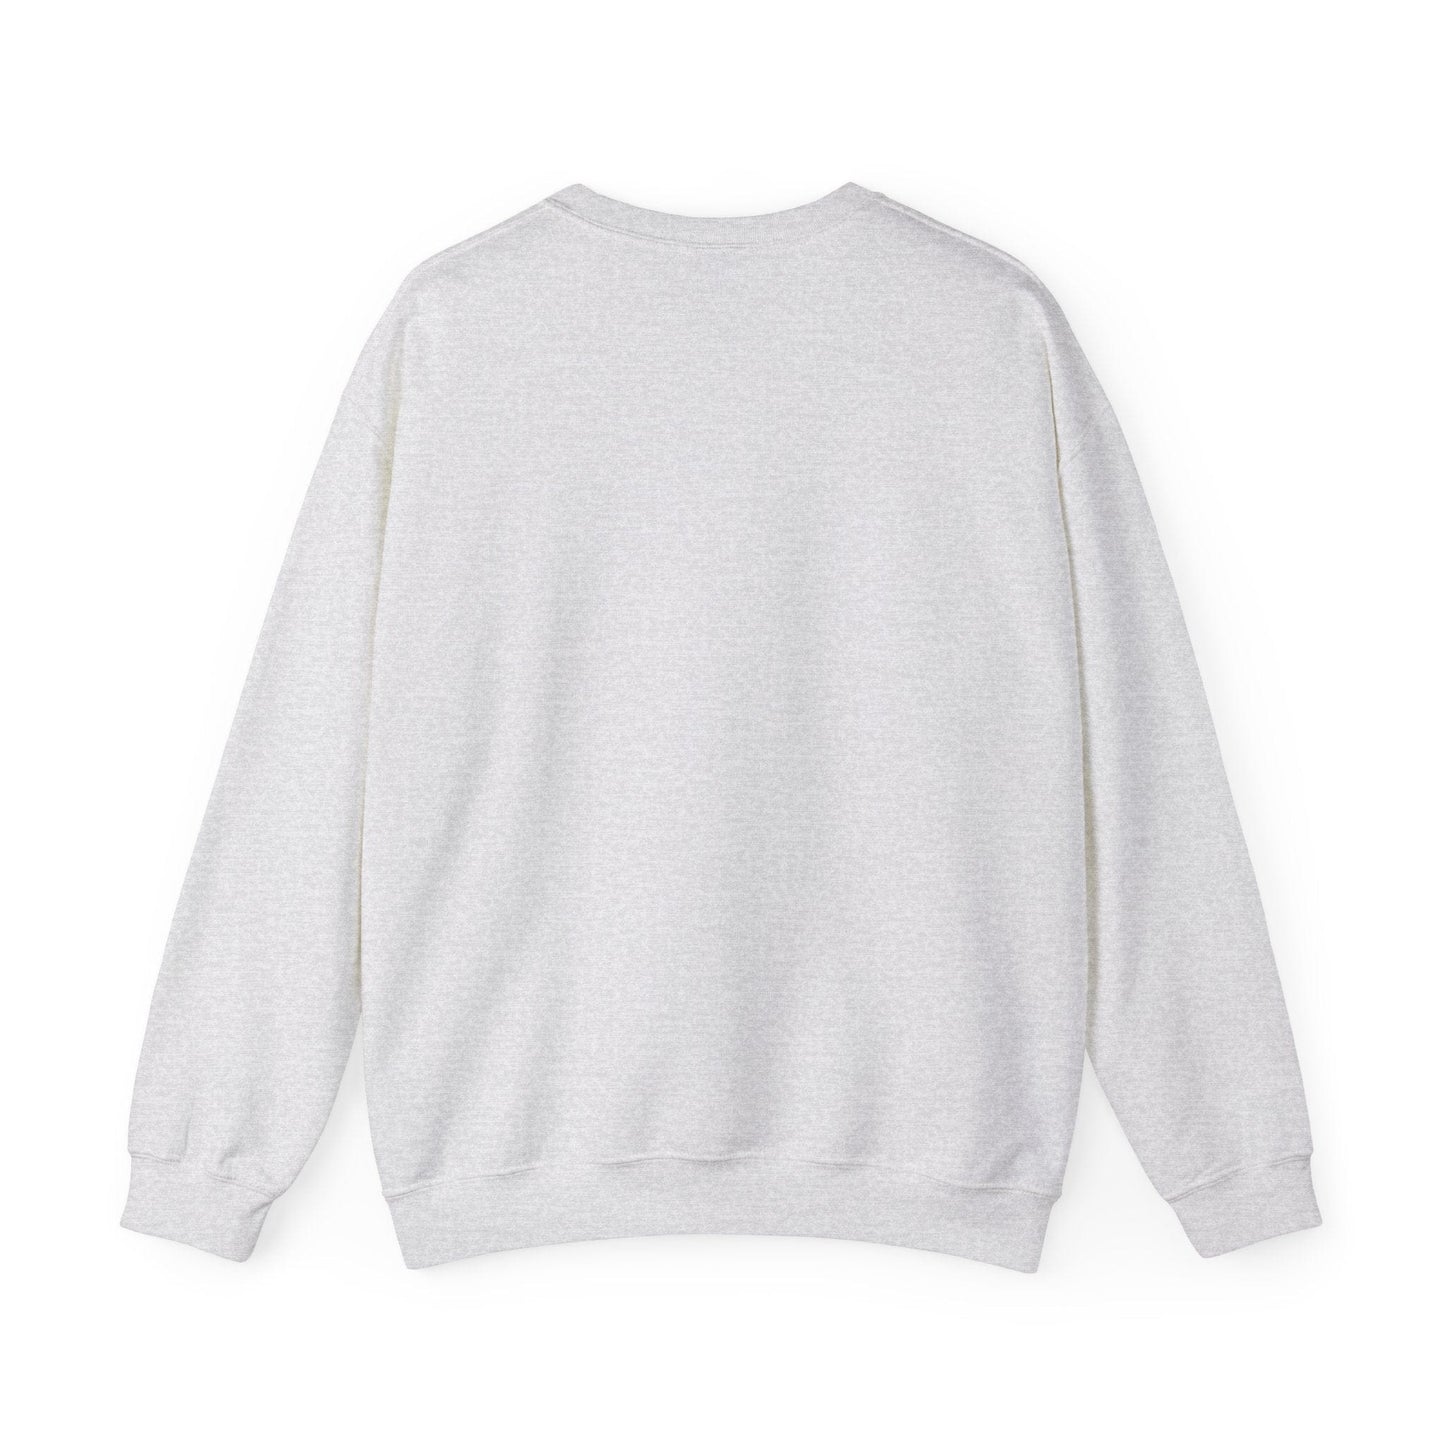 Sweatshirt The Lovers Gemini Sweater